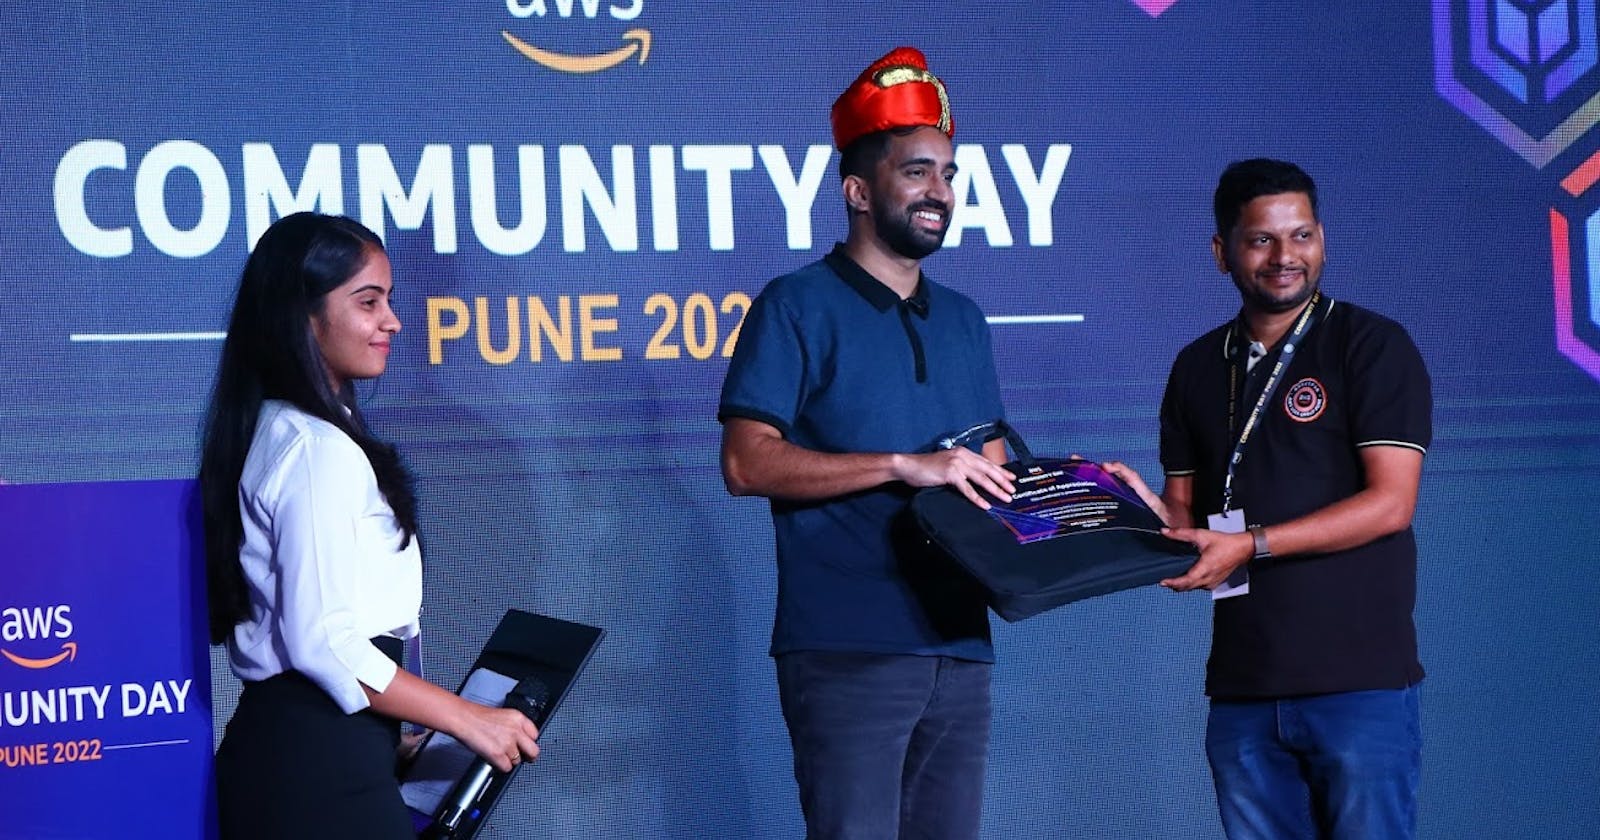 AWS Community Day Pune 2022